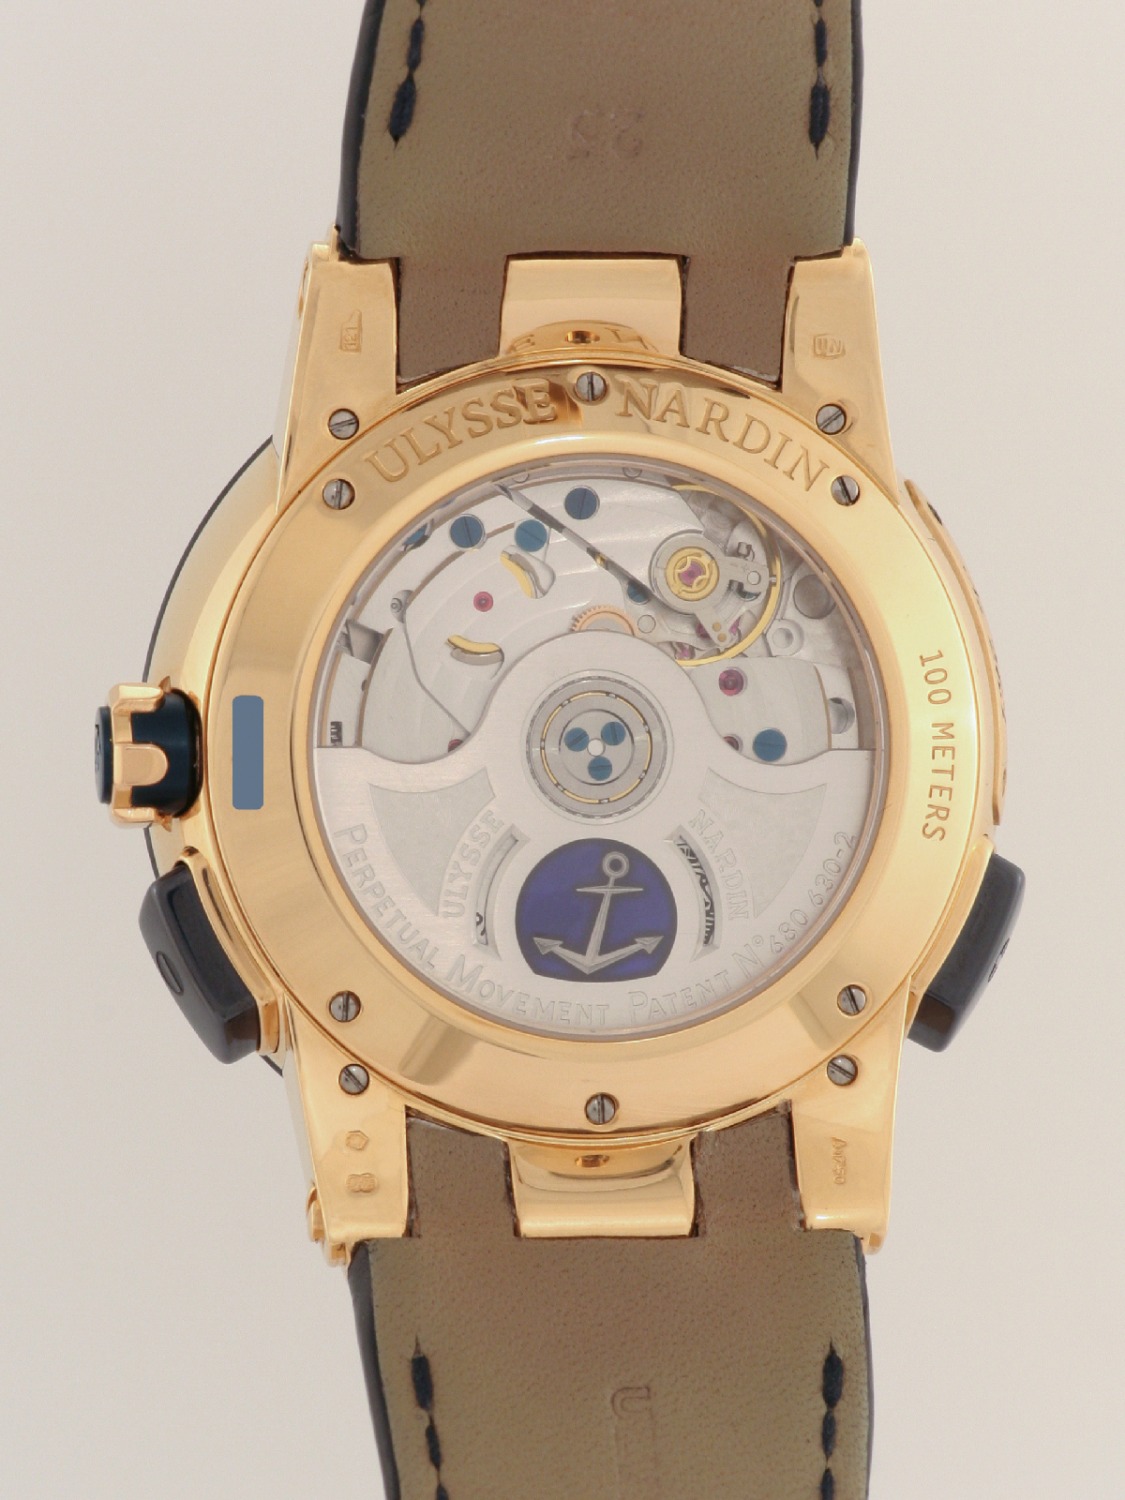 Ulysse Nardin El Toro “Blue” Perpetual Calendar GMT watch, rose gold